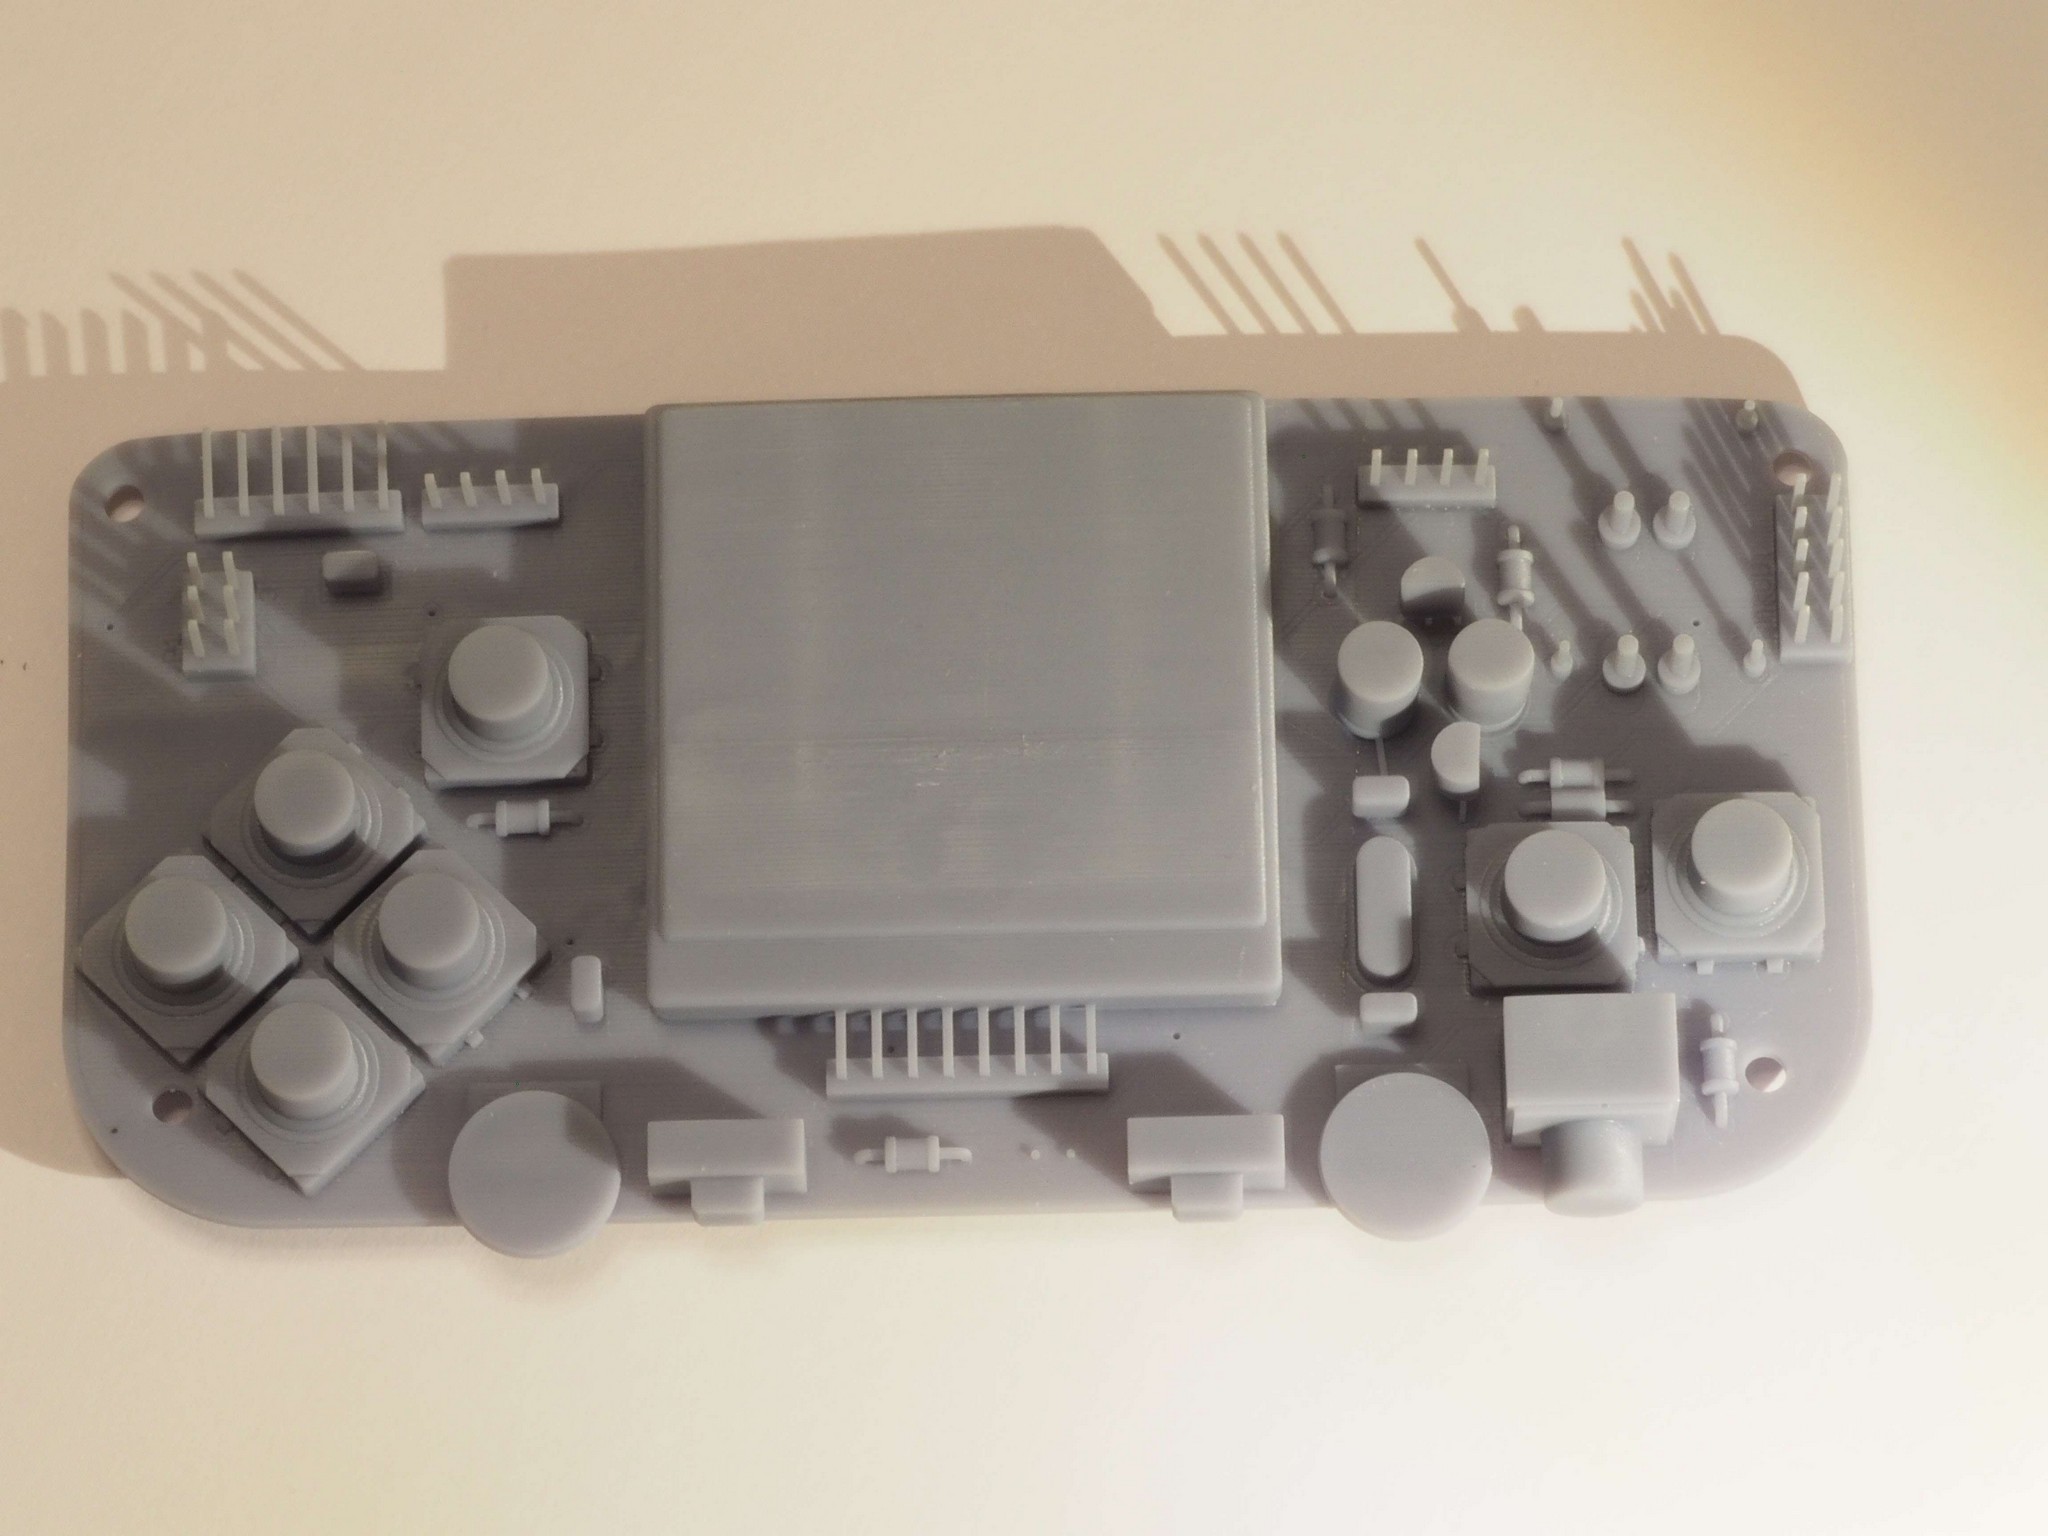 SLA 3D Print of Gamebuino STEP Model. Top View